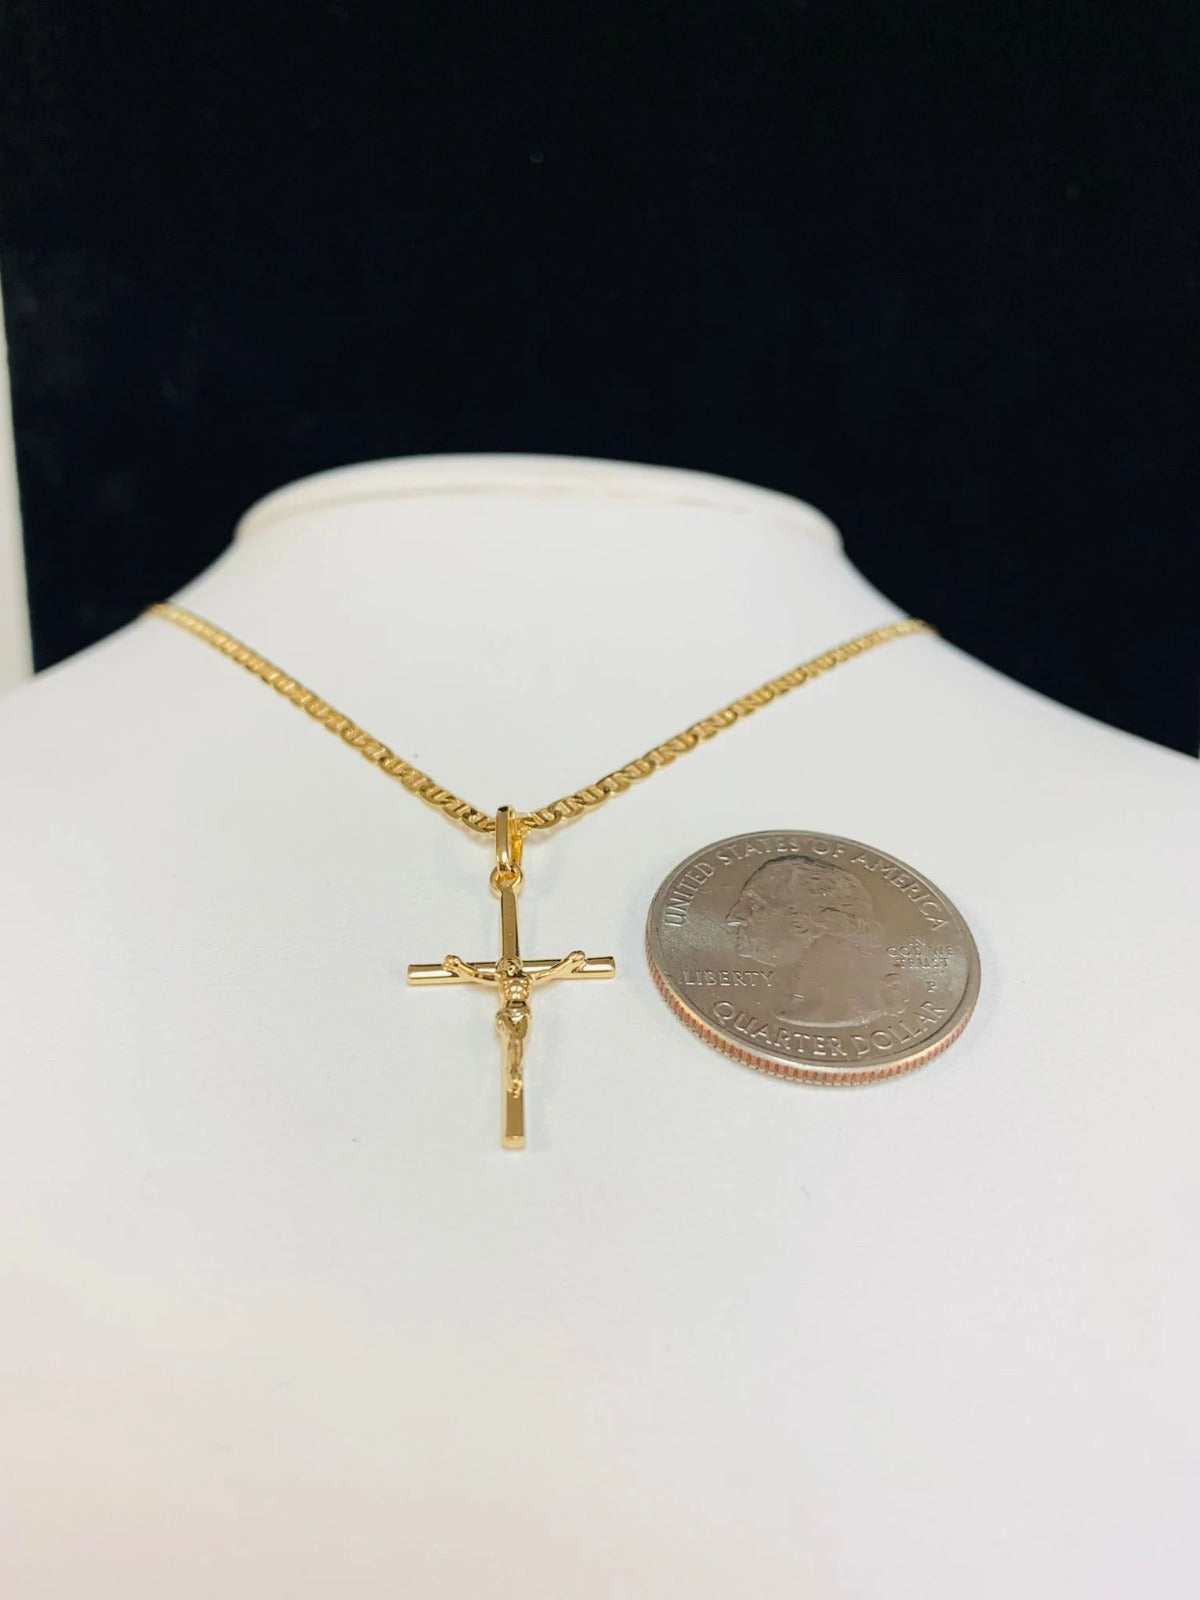 Children's Cross Necklace 14K Yellow Gold 15